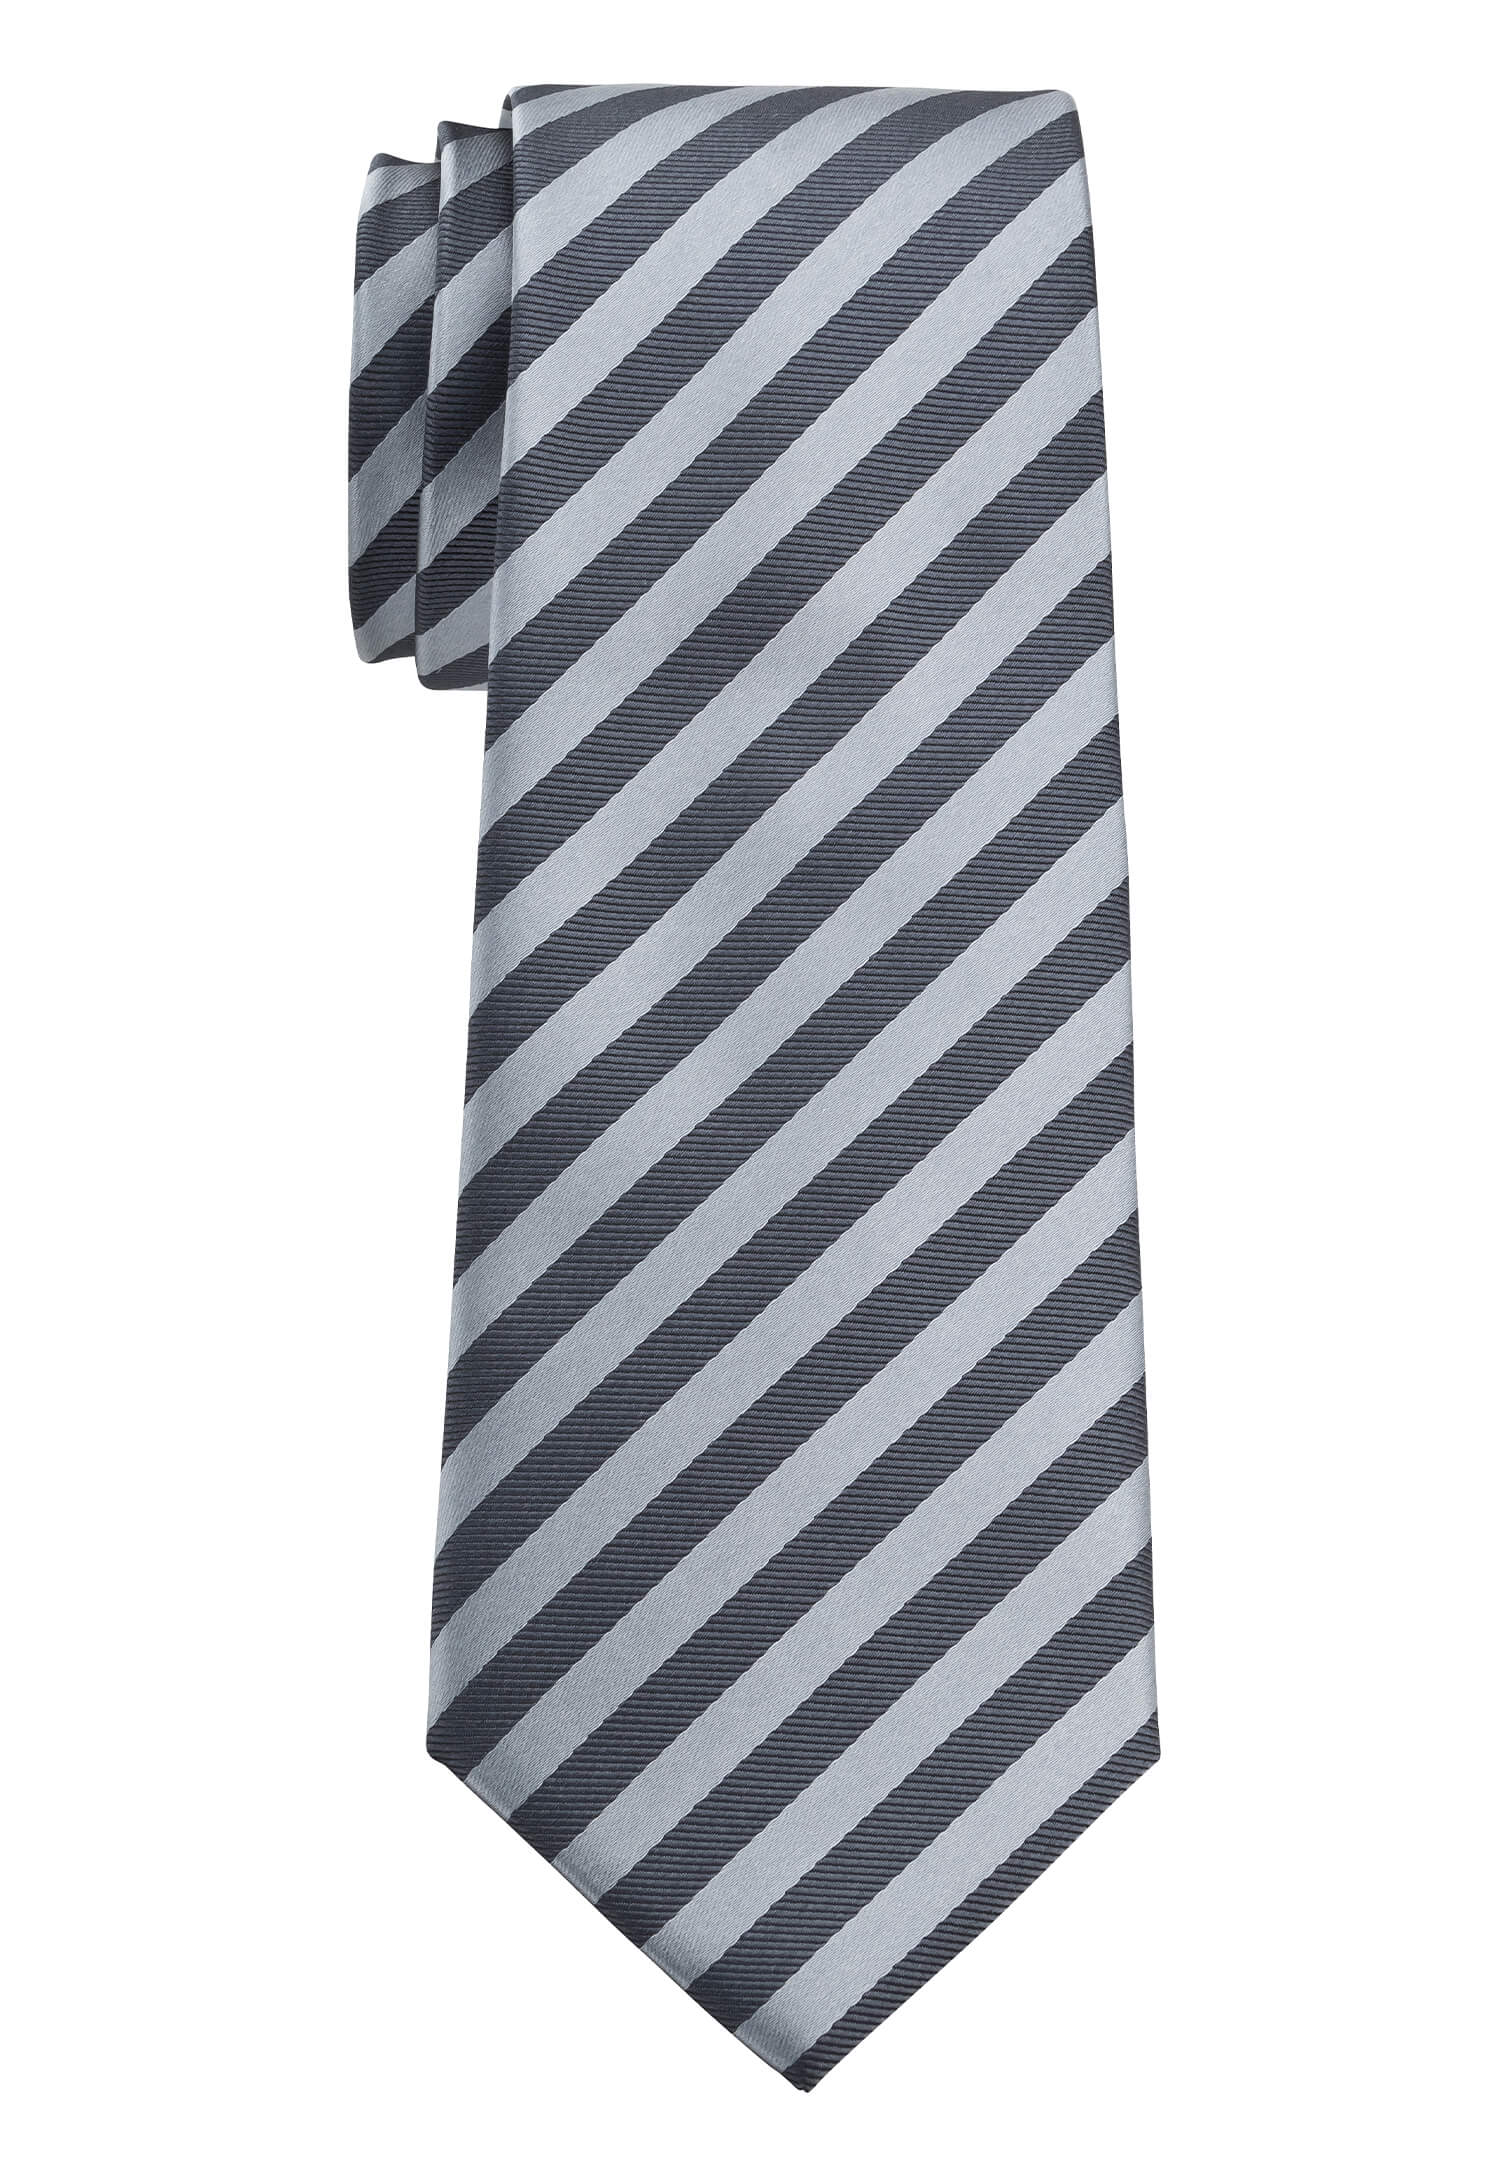 Krawatte grau/hellgrau gestreift